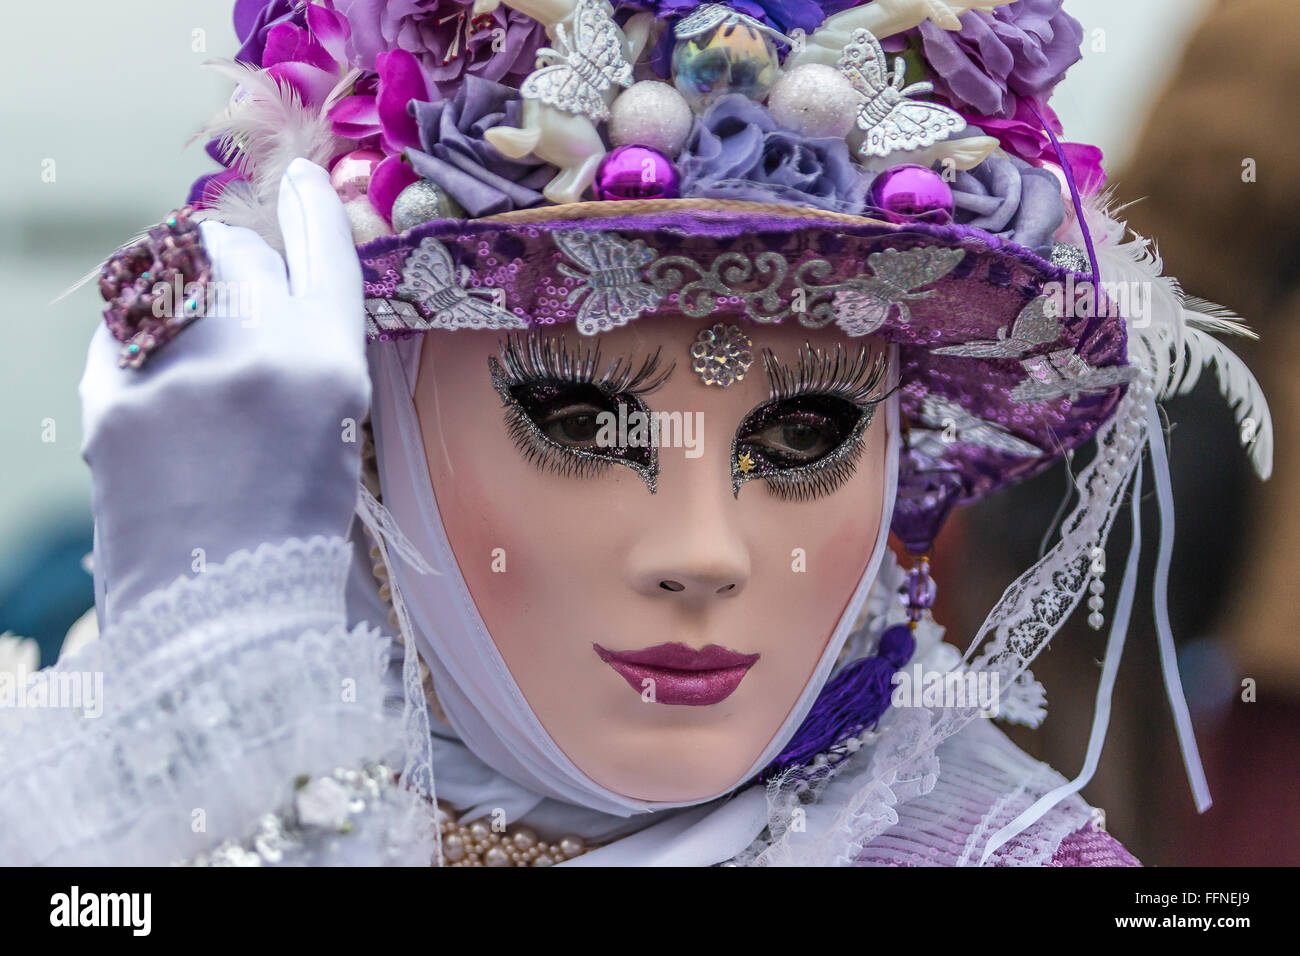 Venice carnival costume and mask Stock Photo - Alamy